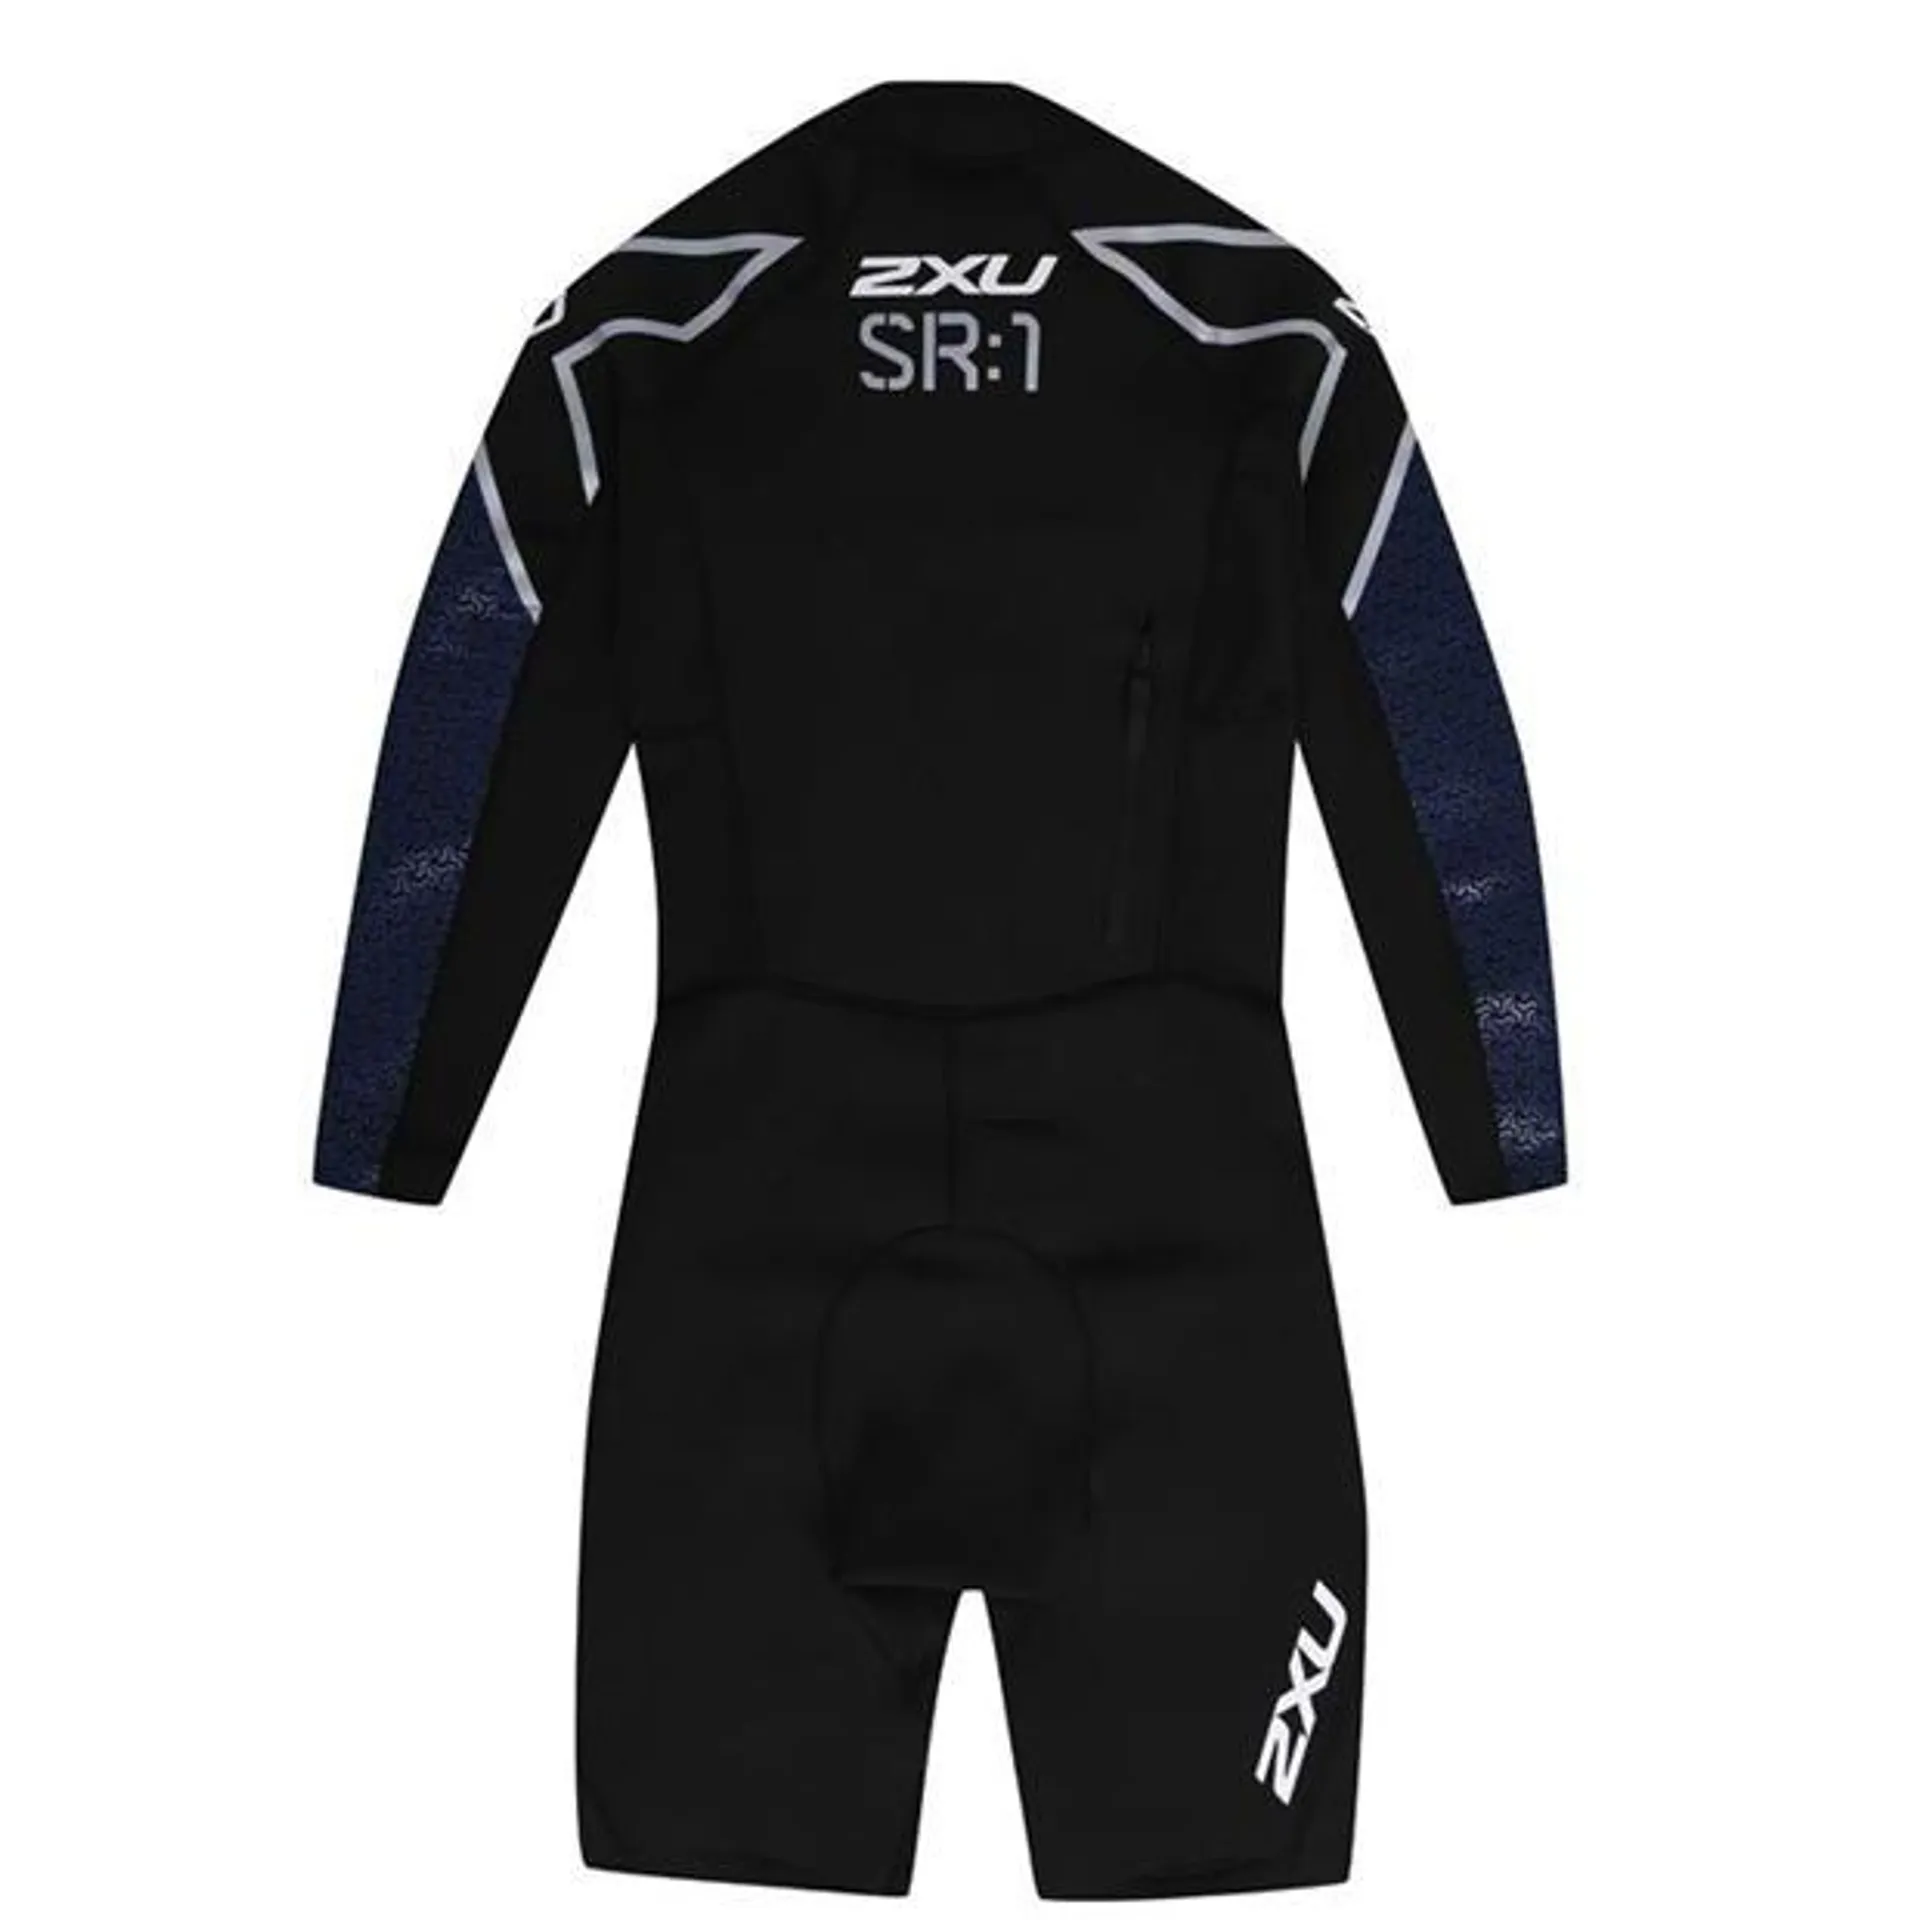 Pro-Swim Run SR1 Wetsuit